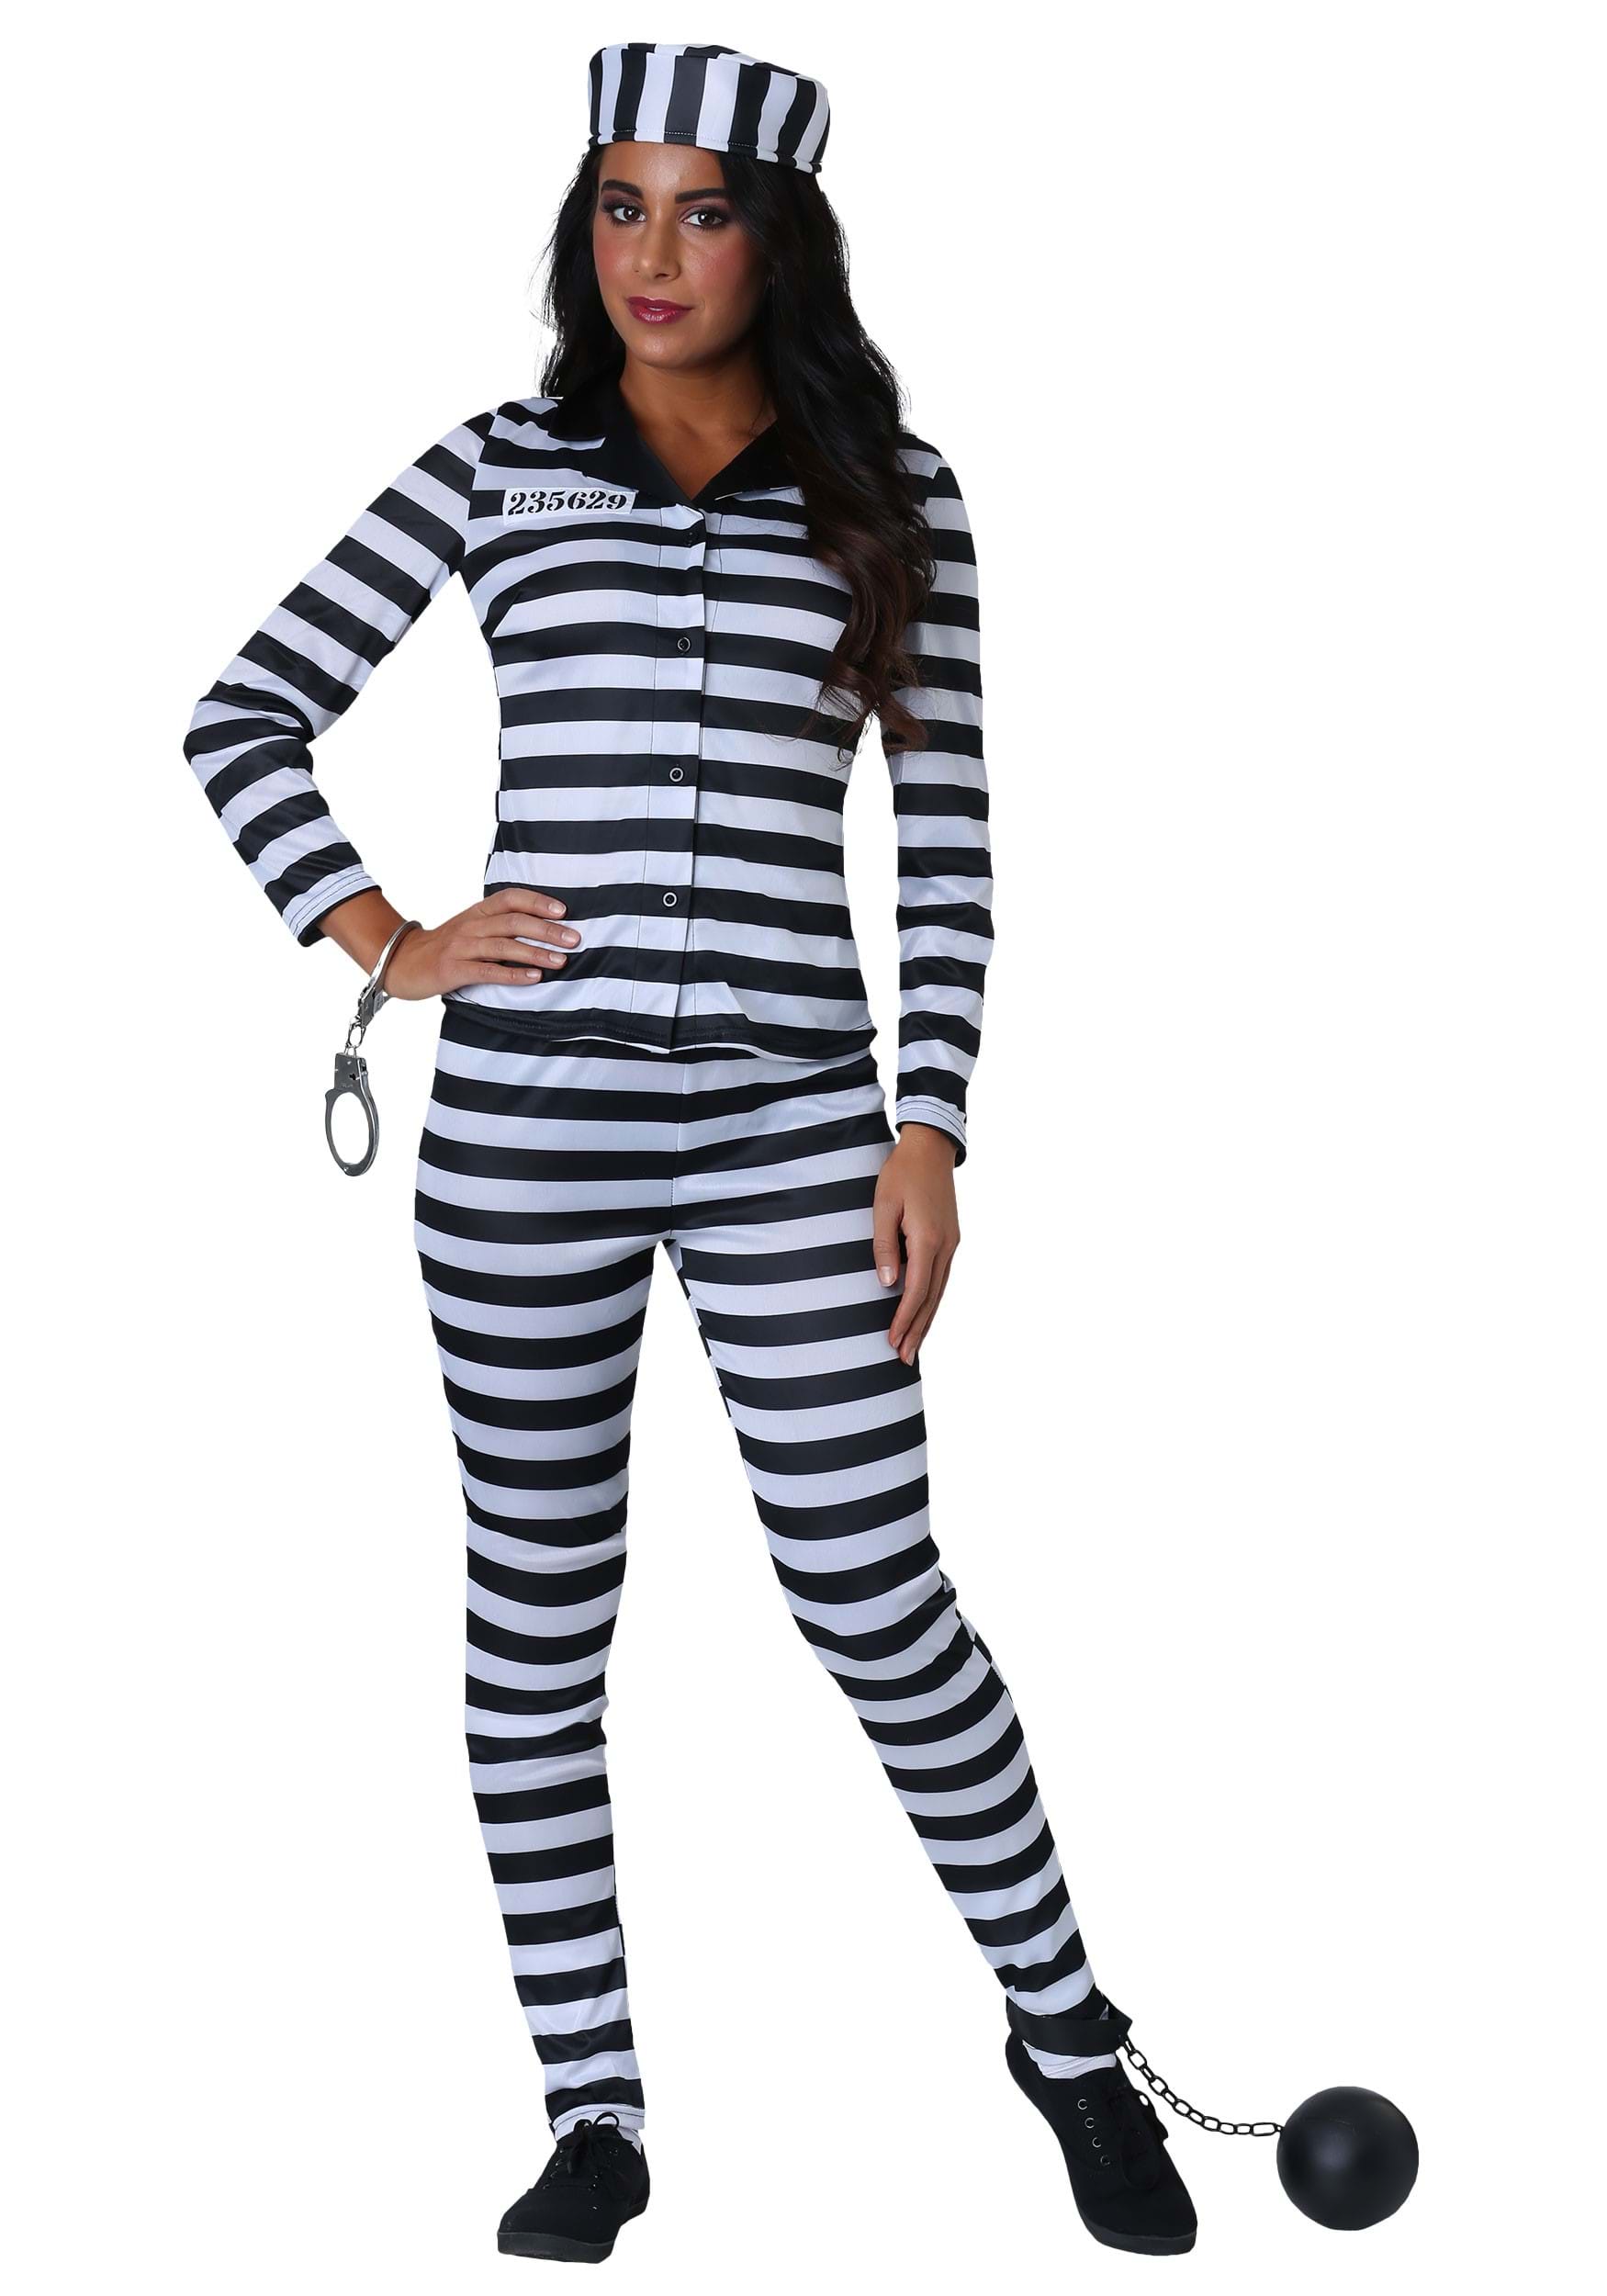 Women’s Incarcerated Cutie Costume